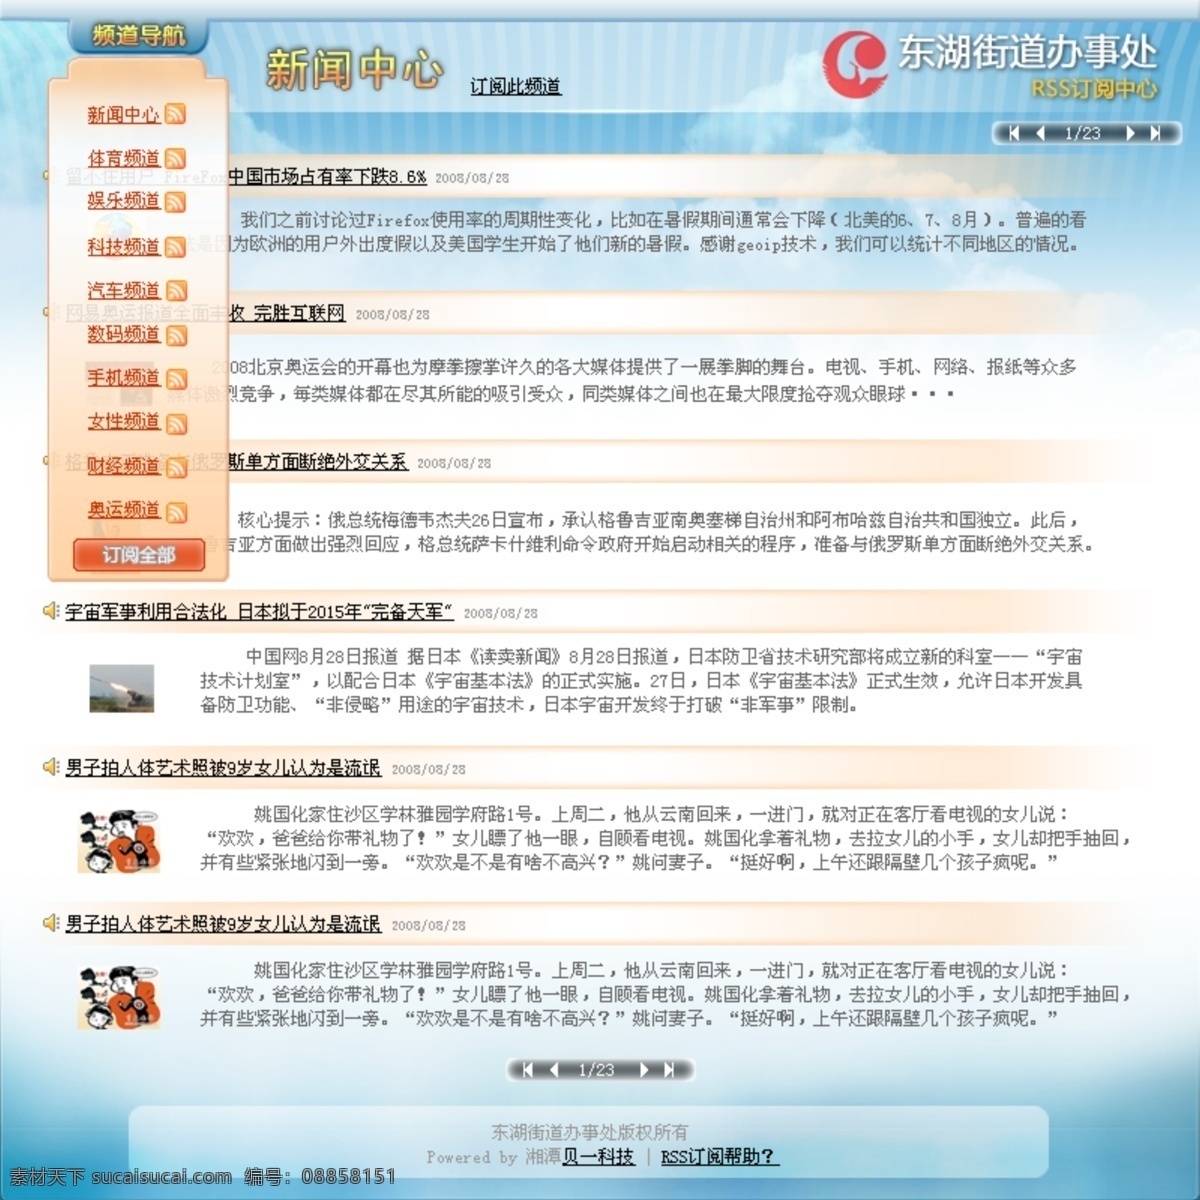 rss 新闻 聚合 网页 模版 网页模板 网页模版 源文件 中文模版 订阅 新闻聚合 网页素材